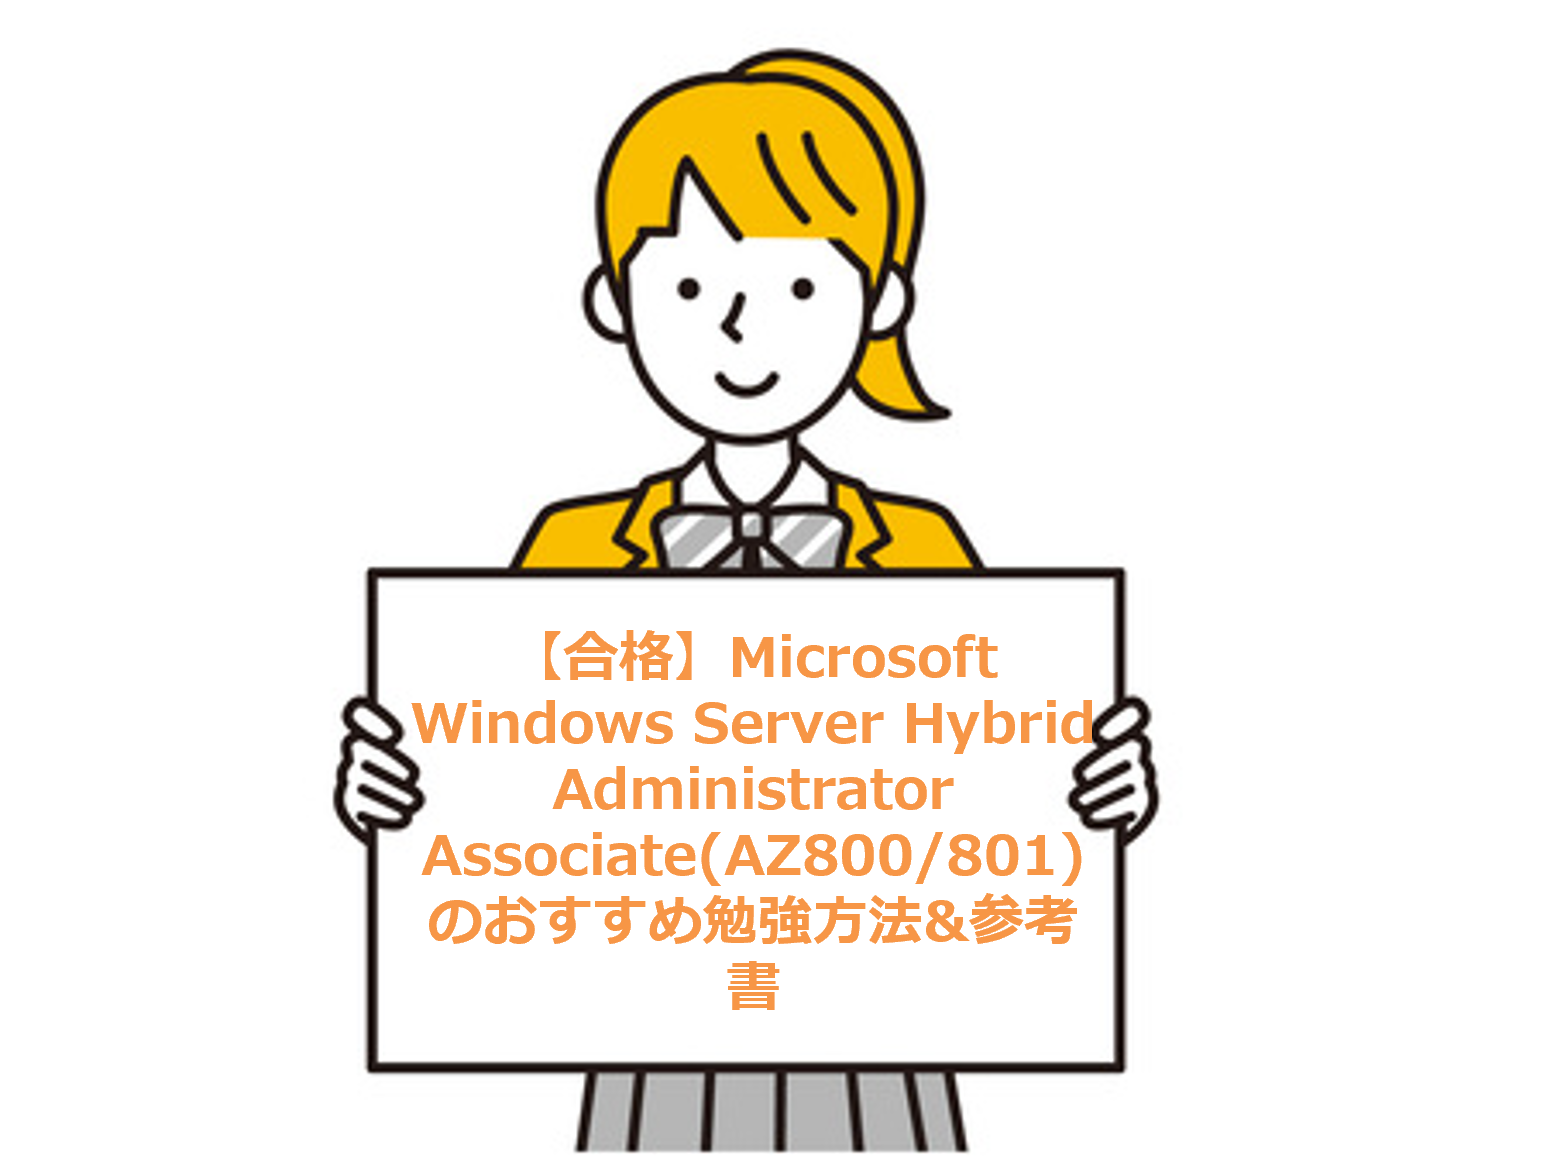 Microsoft Windows Server Hybrid Administrator Associate(AZ800/801)